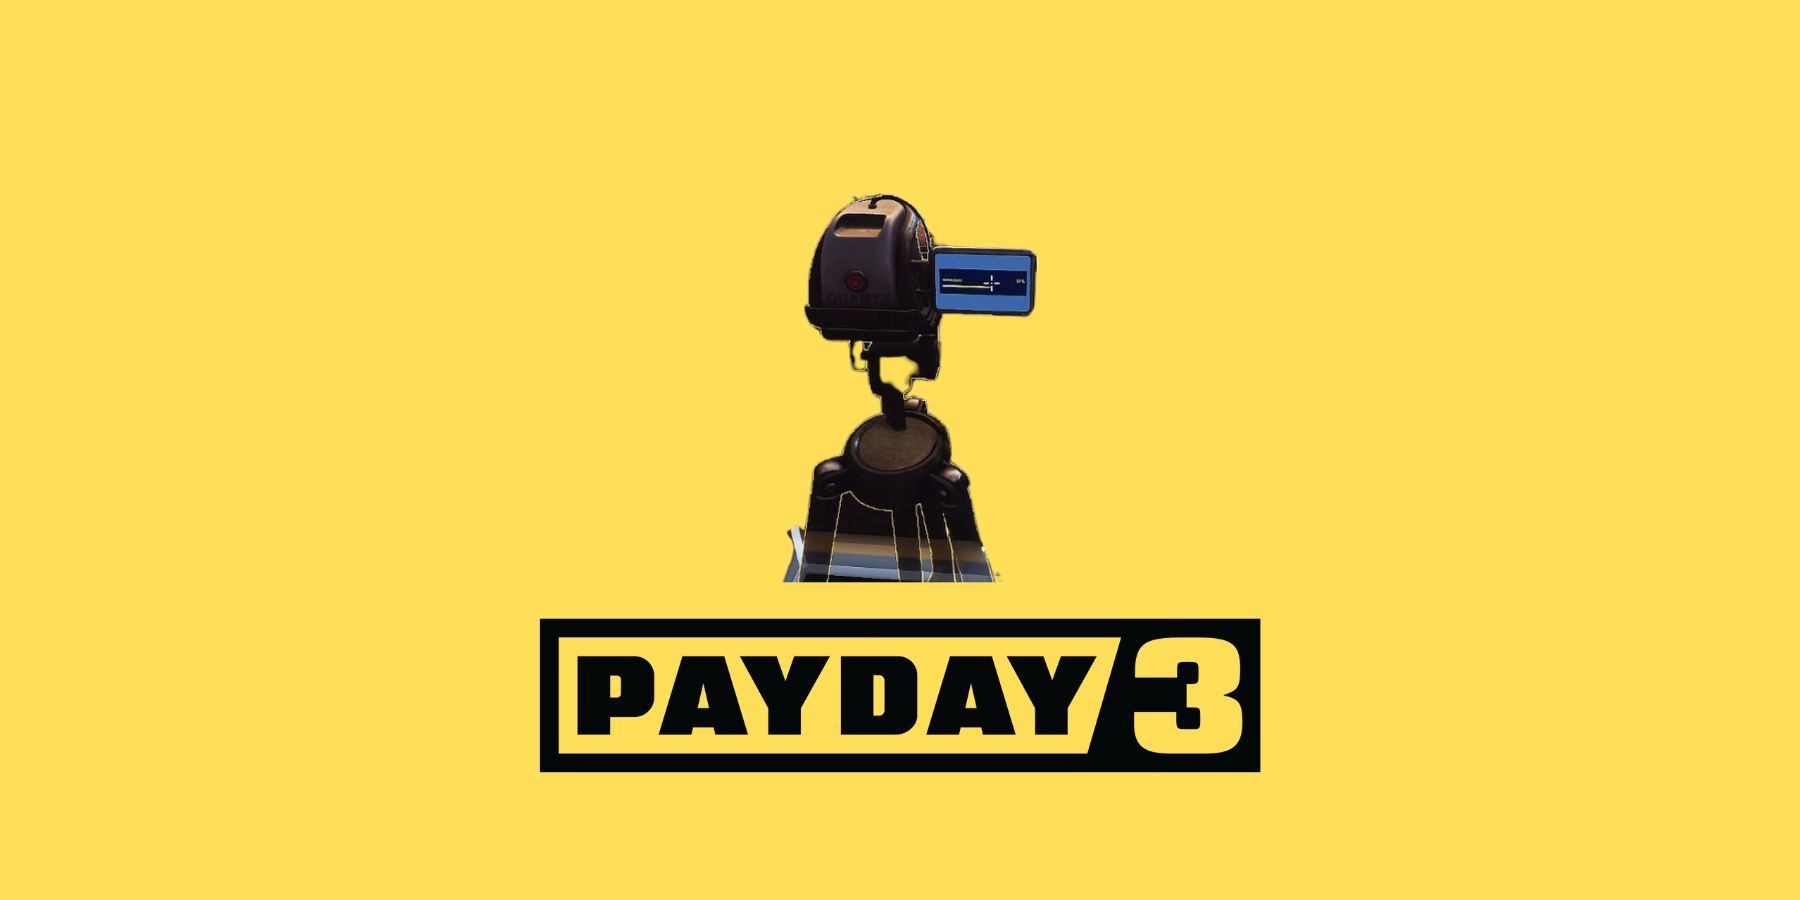 Espectrofotómetro con logotipo Payday 3